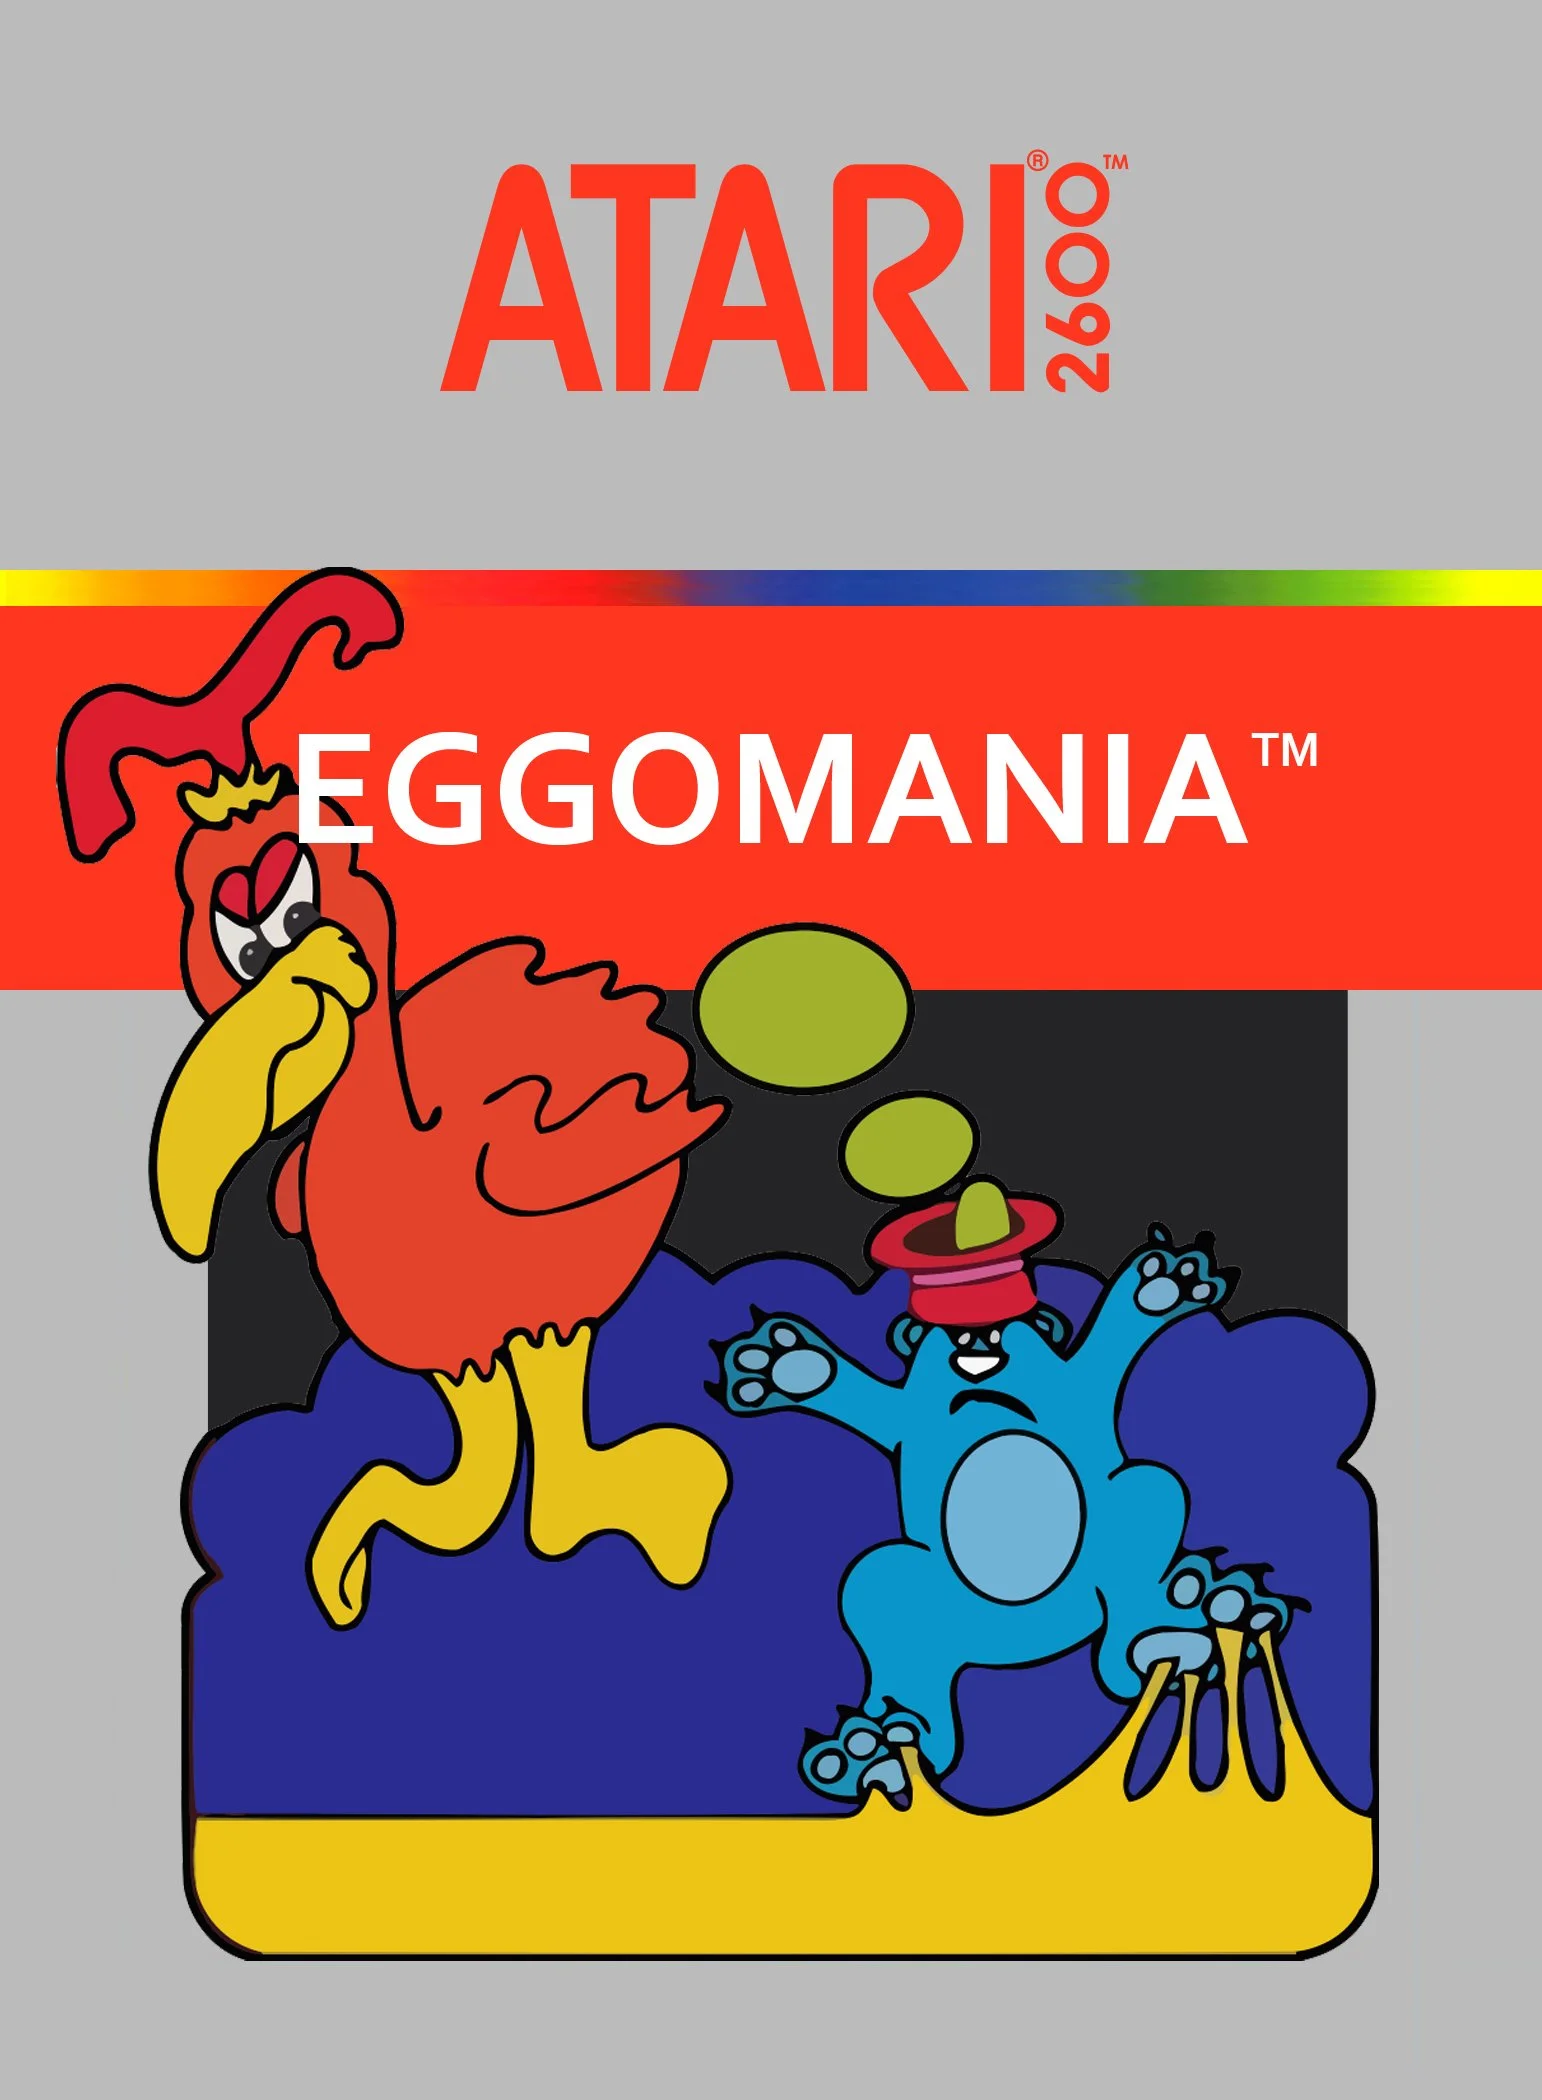 Eggomania